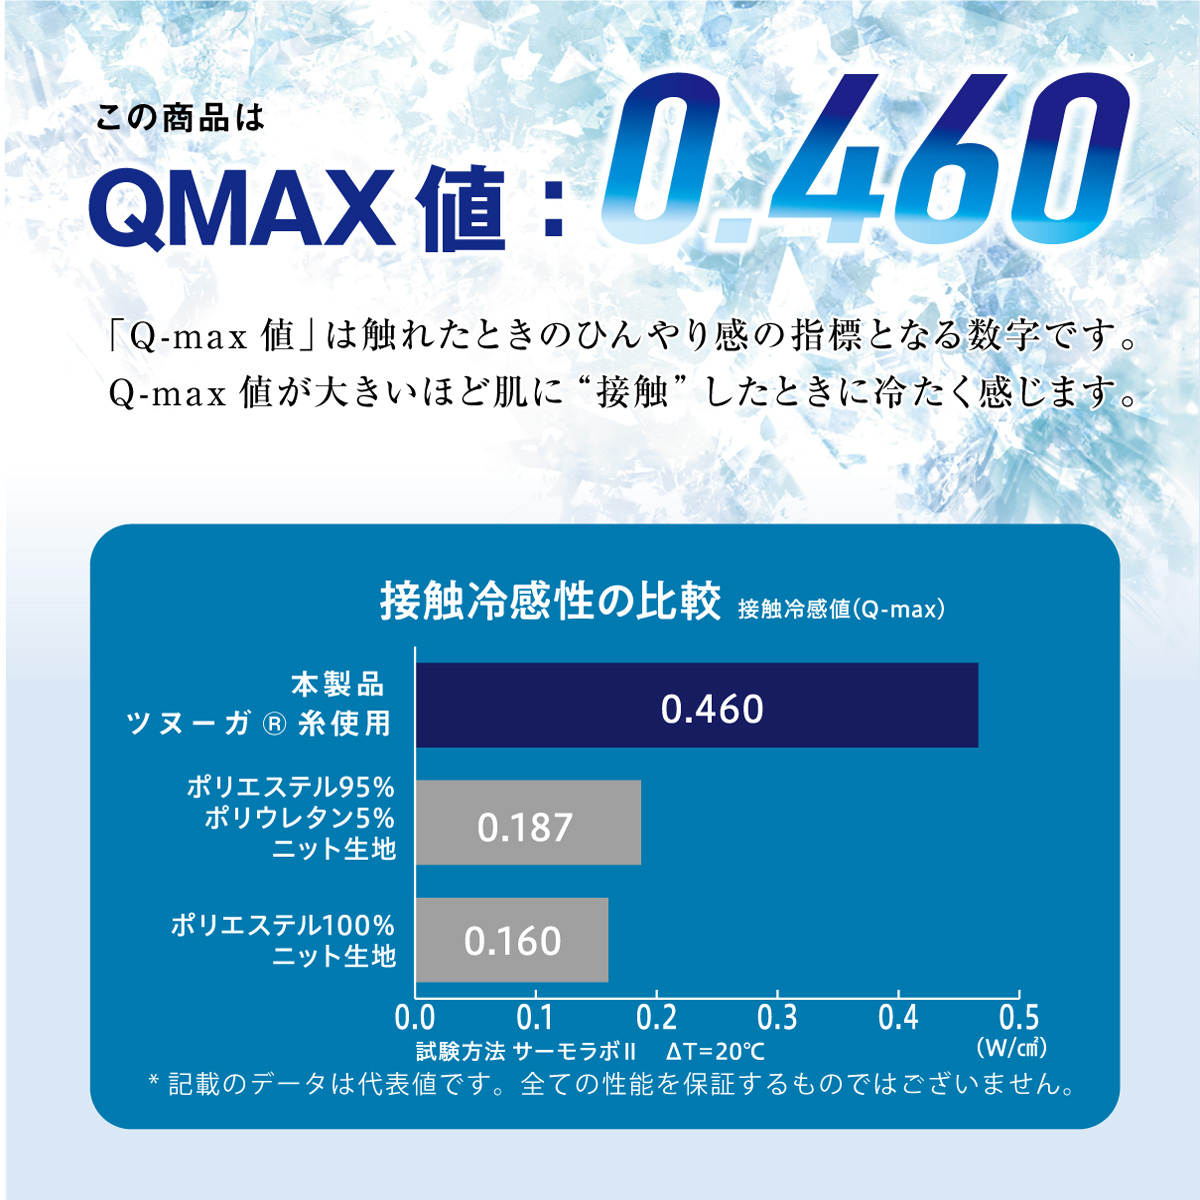 Q-maX値